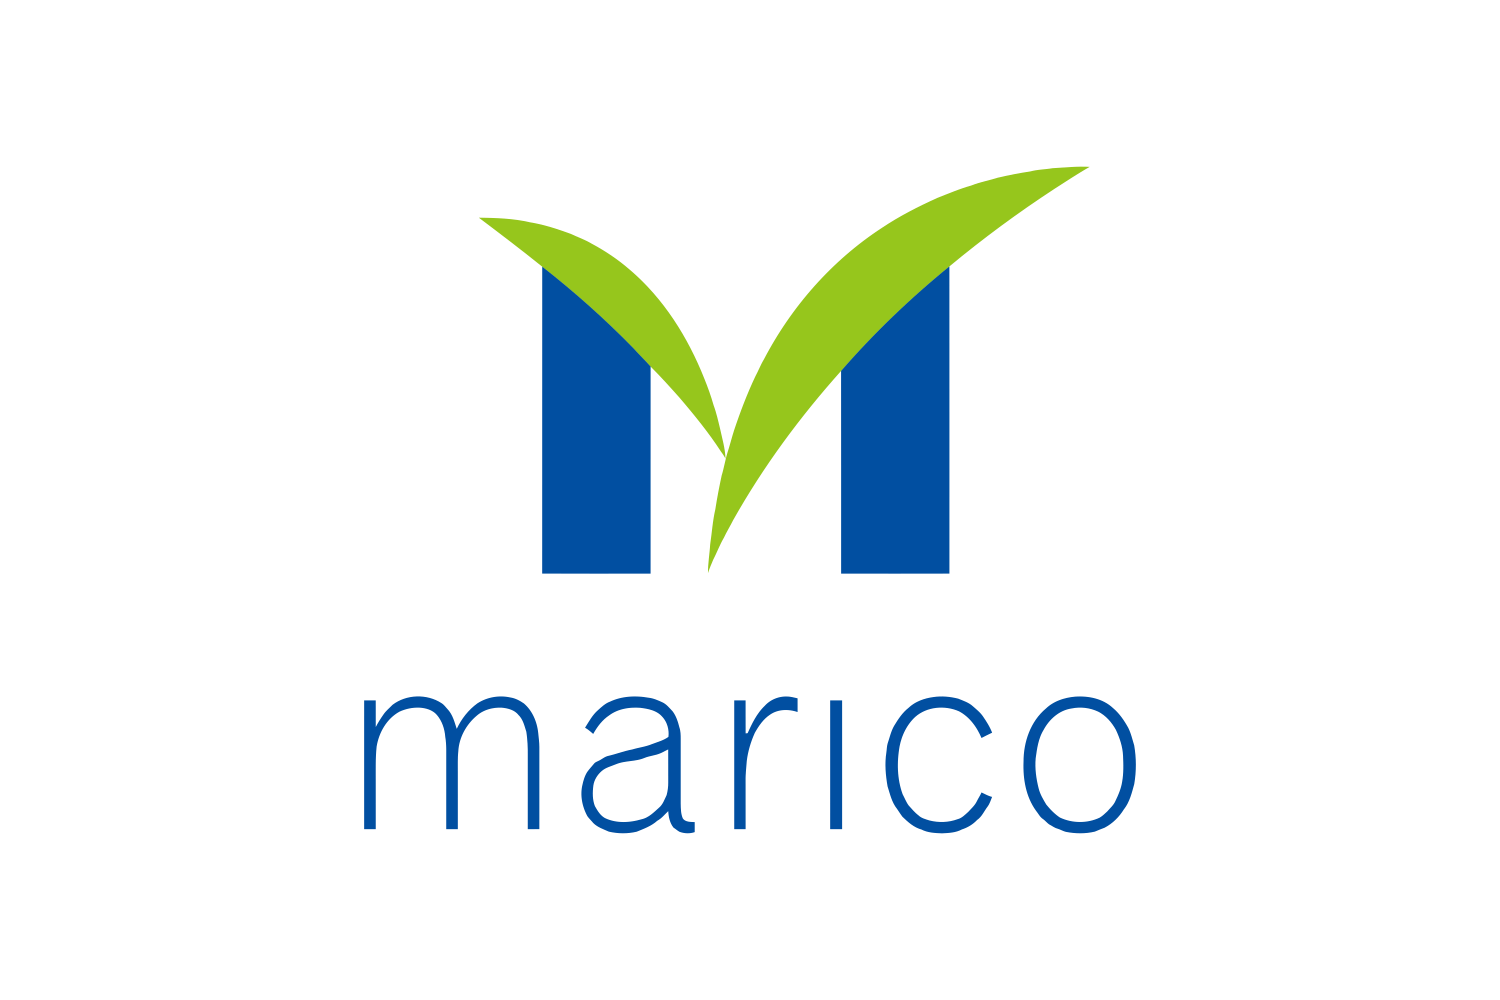 Marico Ltd